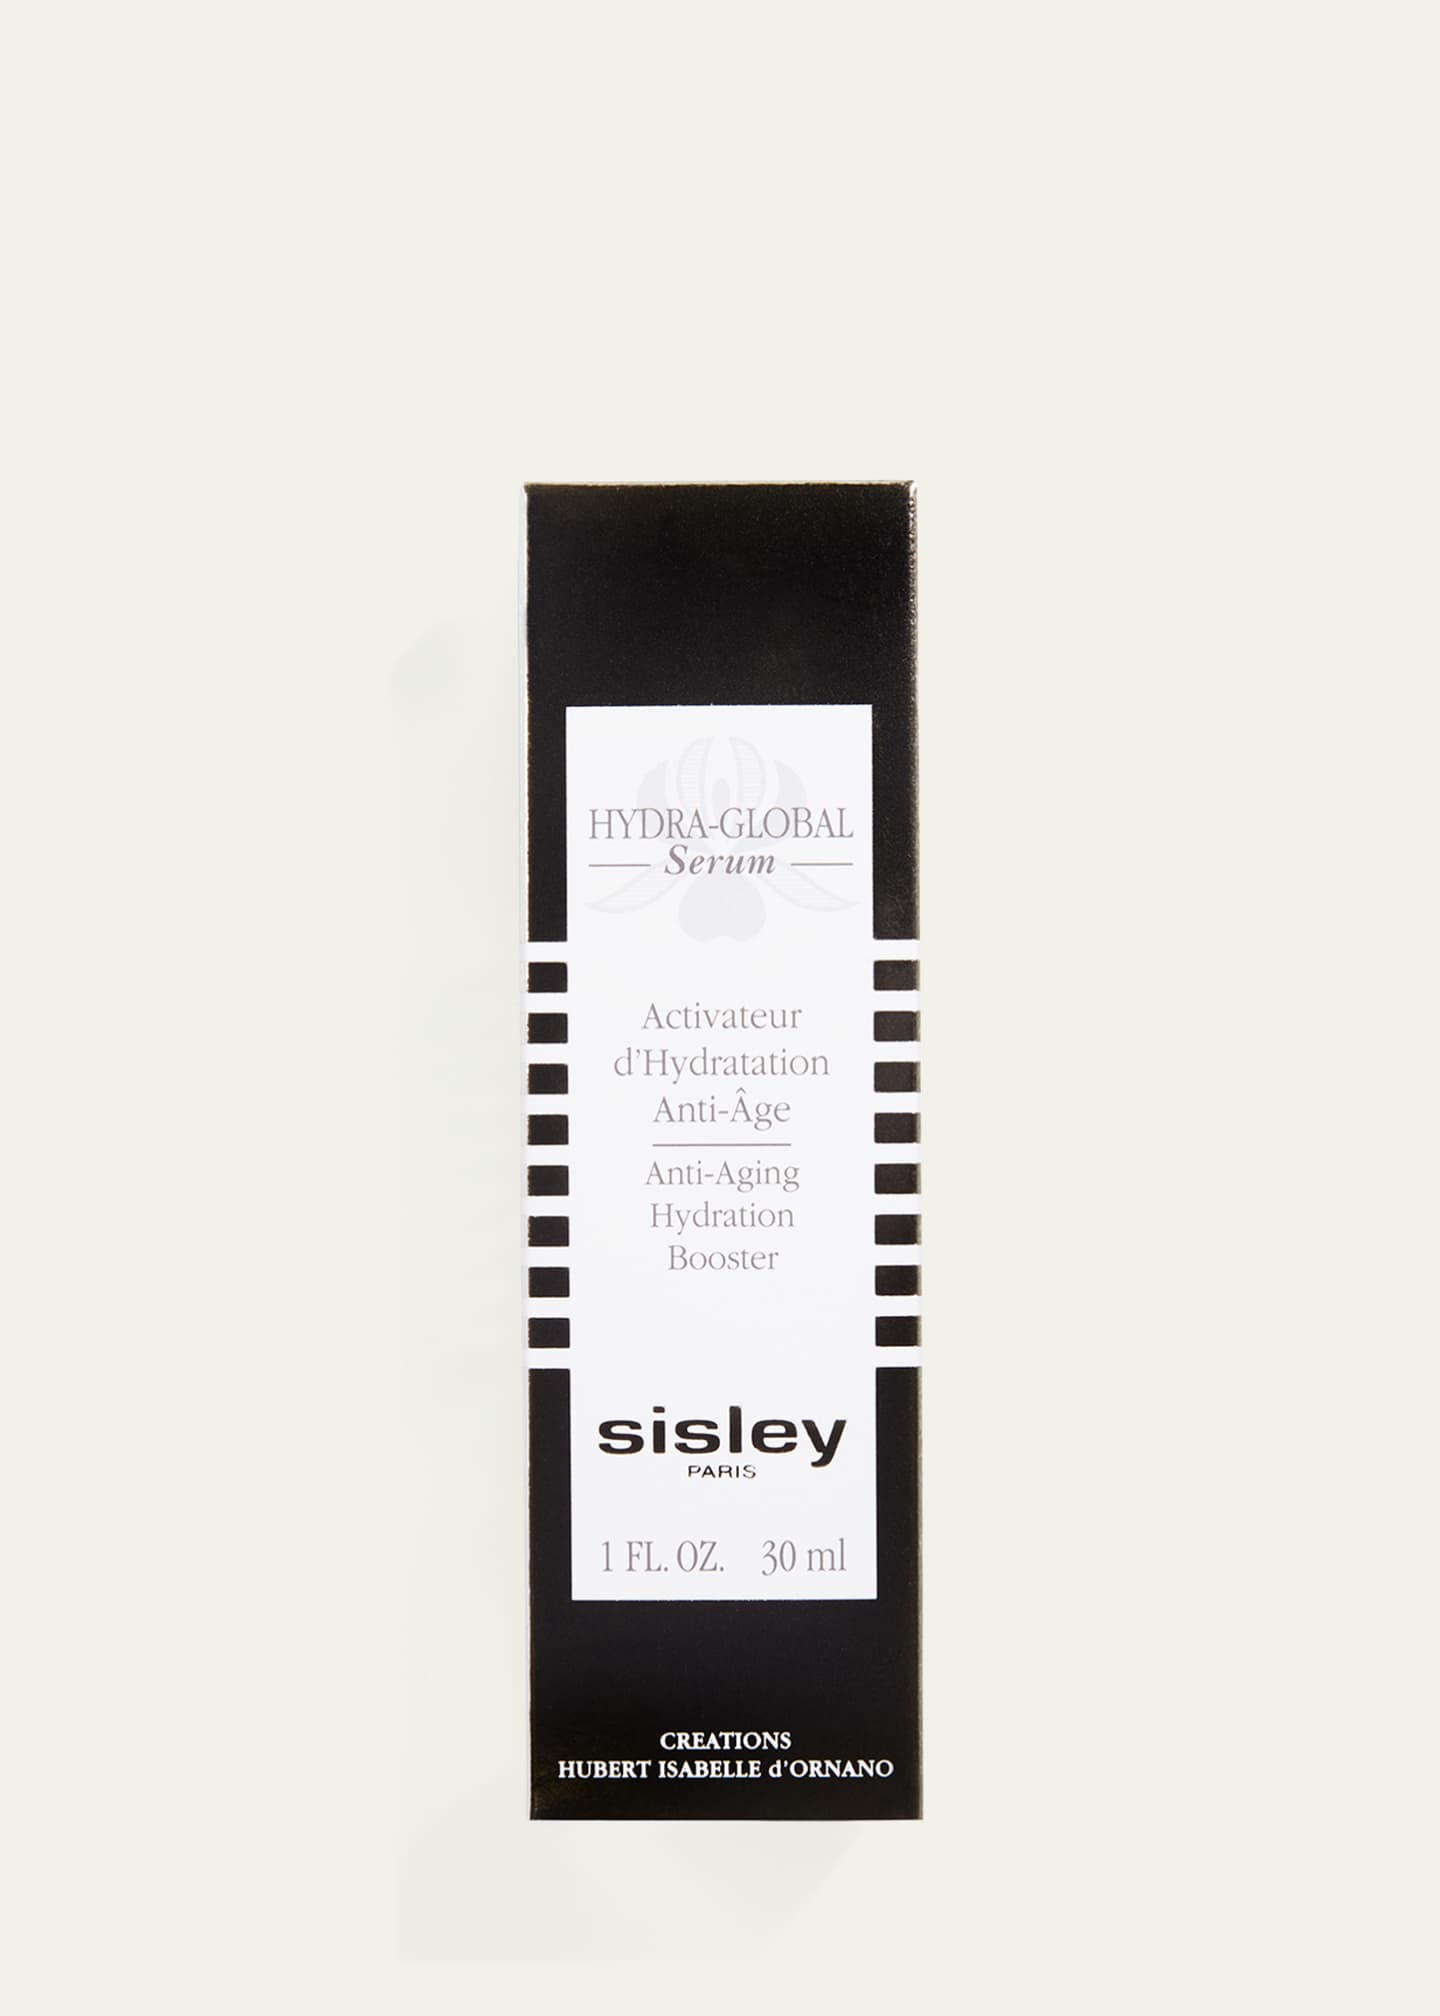 Sisley-Paris Hydra-Global Serum, 1 oz. Image 3 of 3